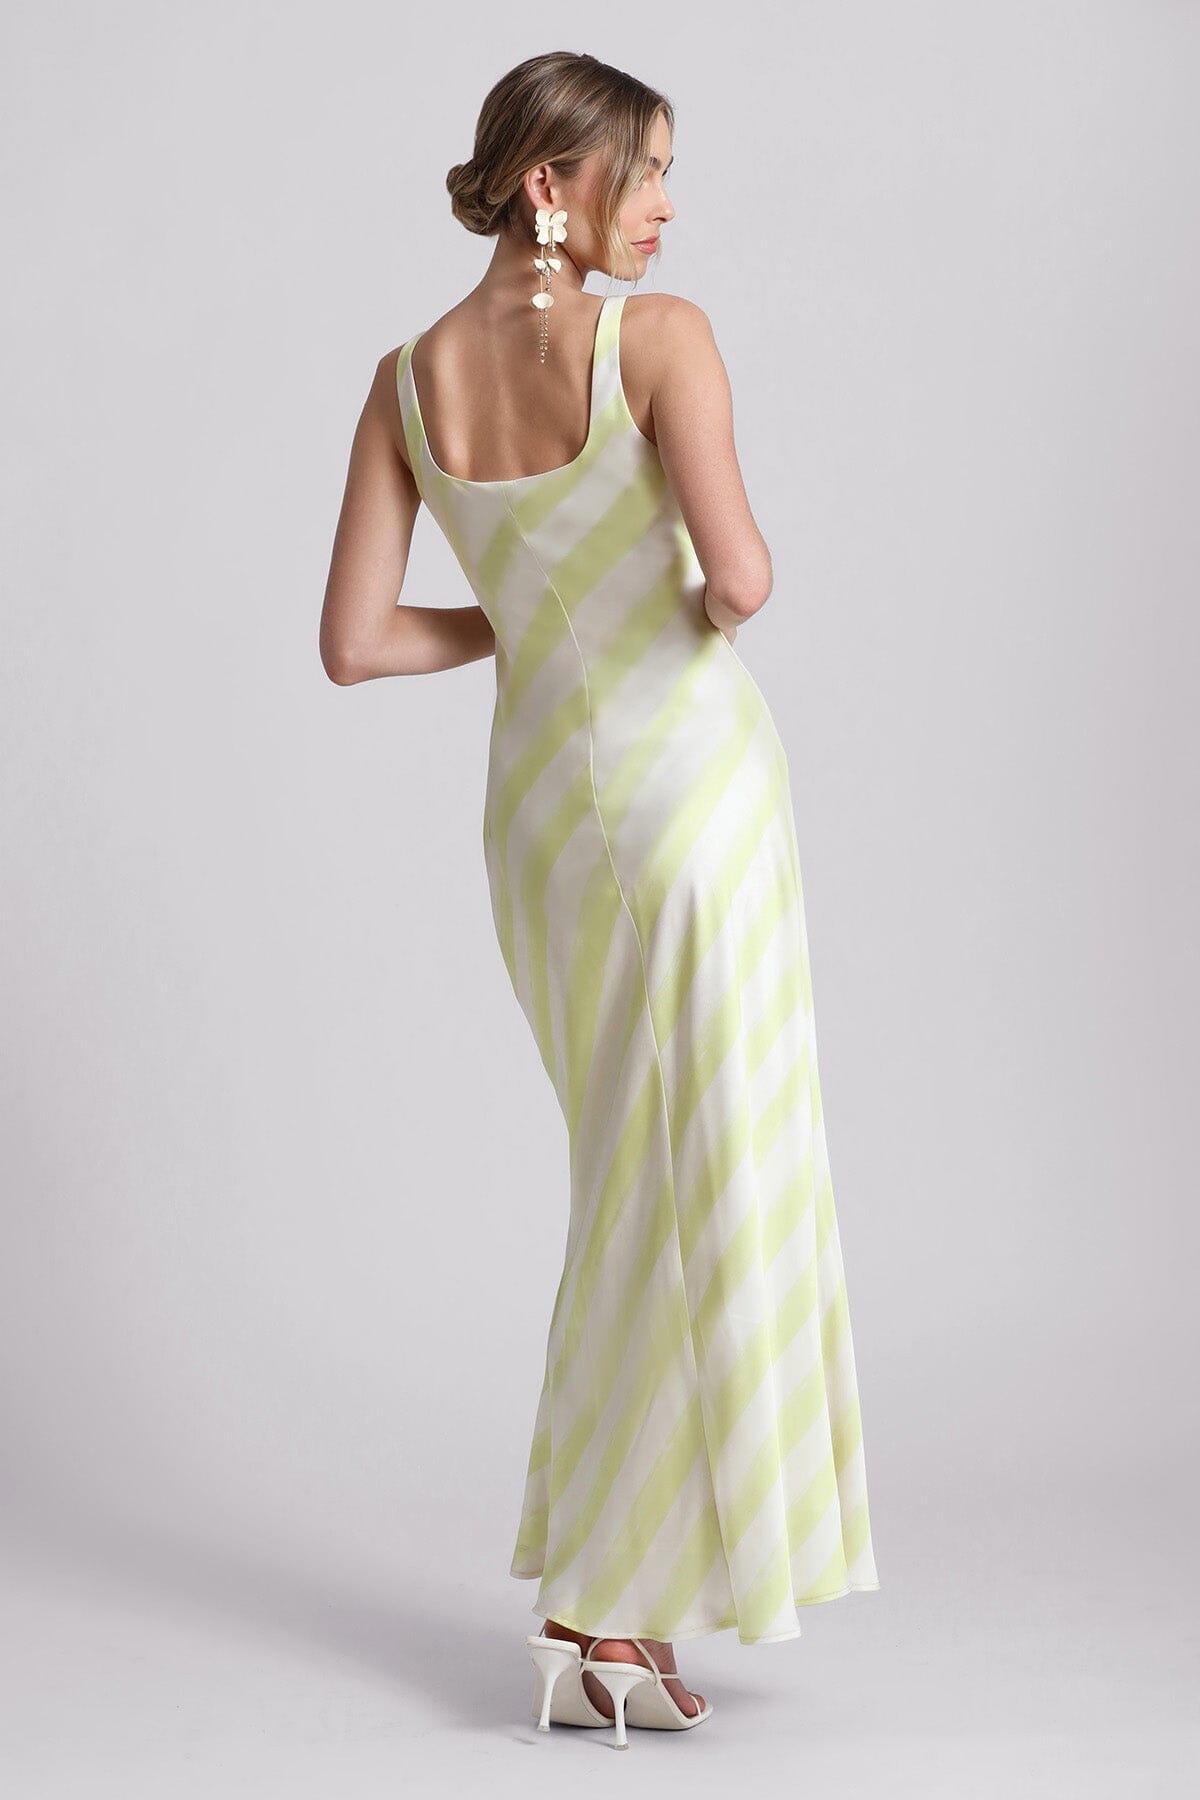 lime green white striped satin bias cut maxi slip dress - women's figure flattering party dresses for Summer 2024 fashion trends by Avec Les Filles